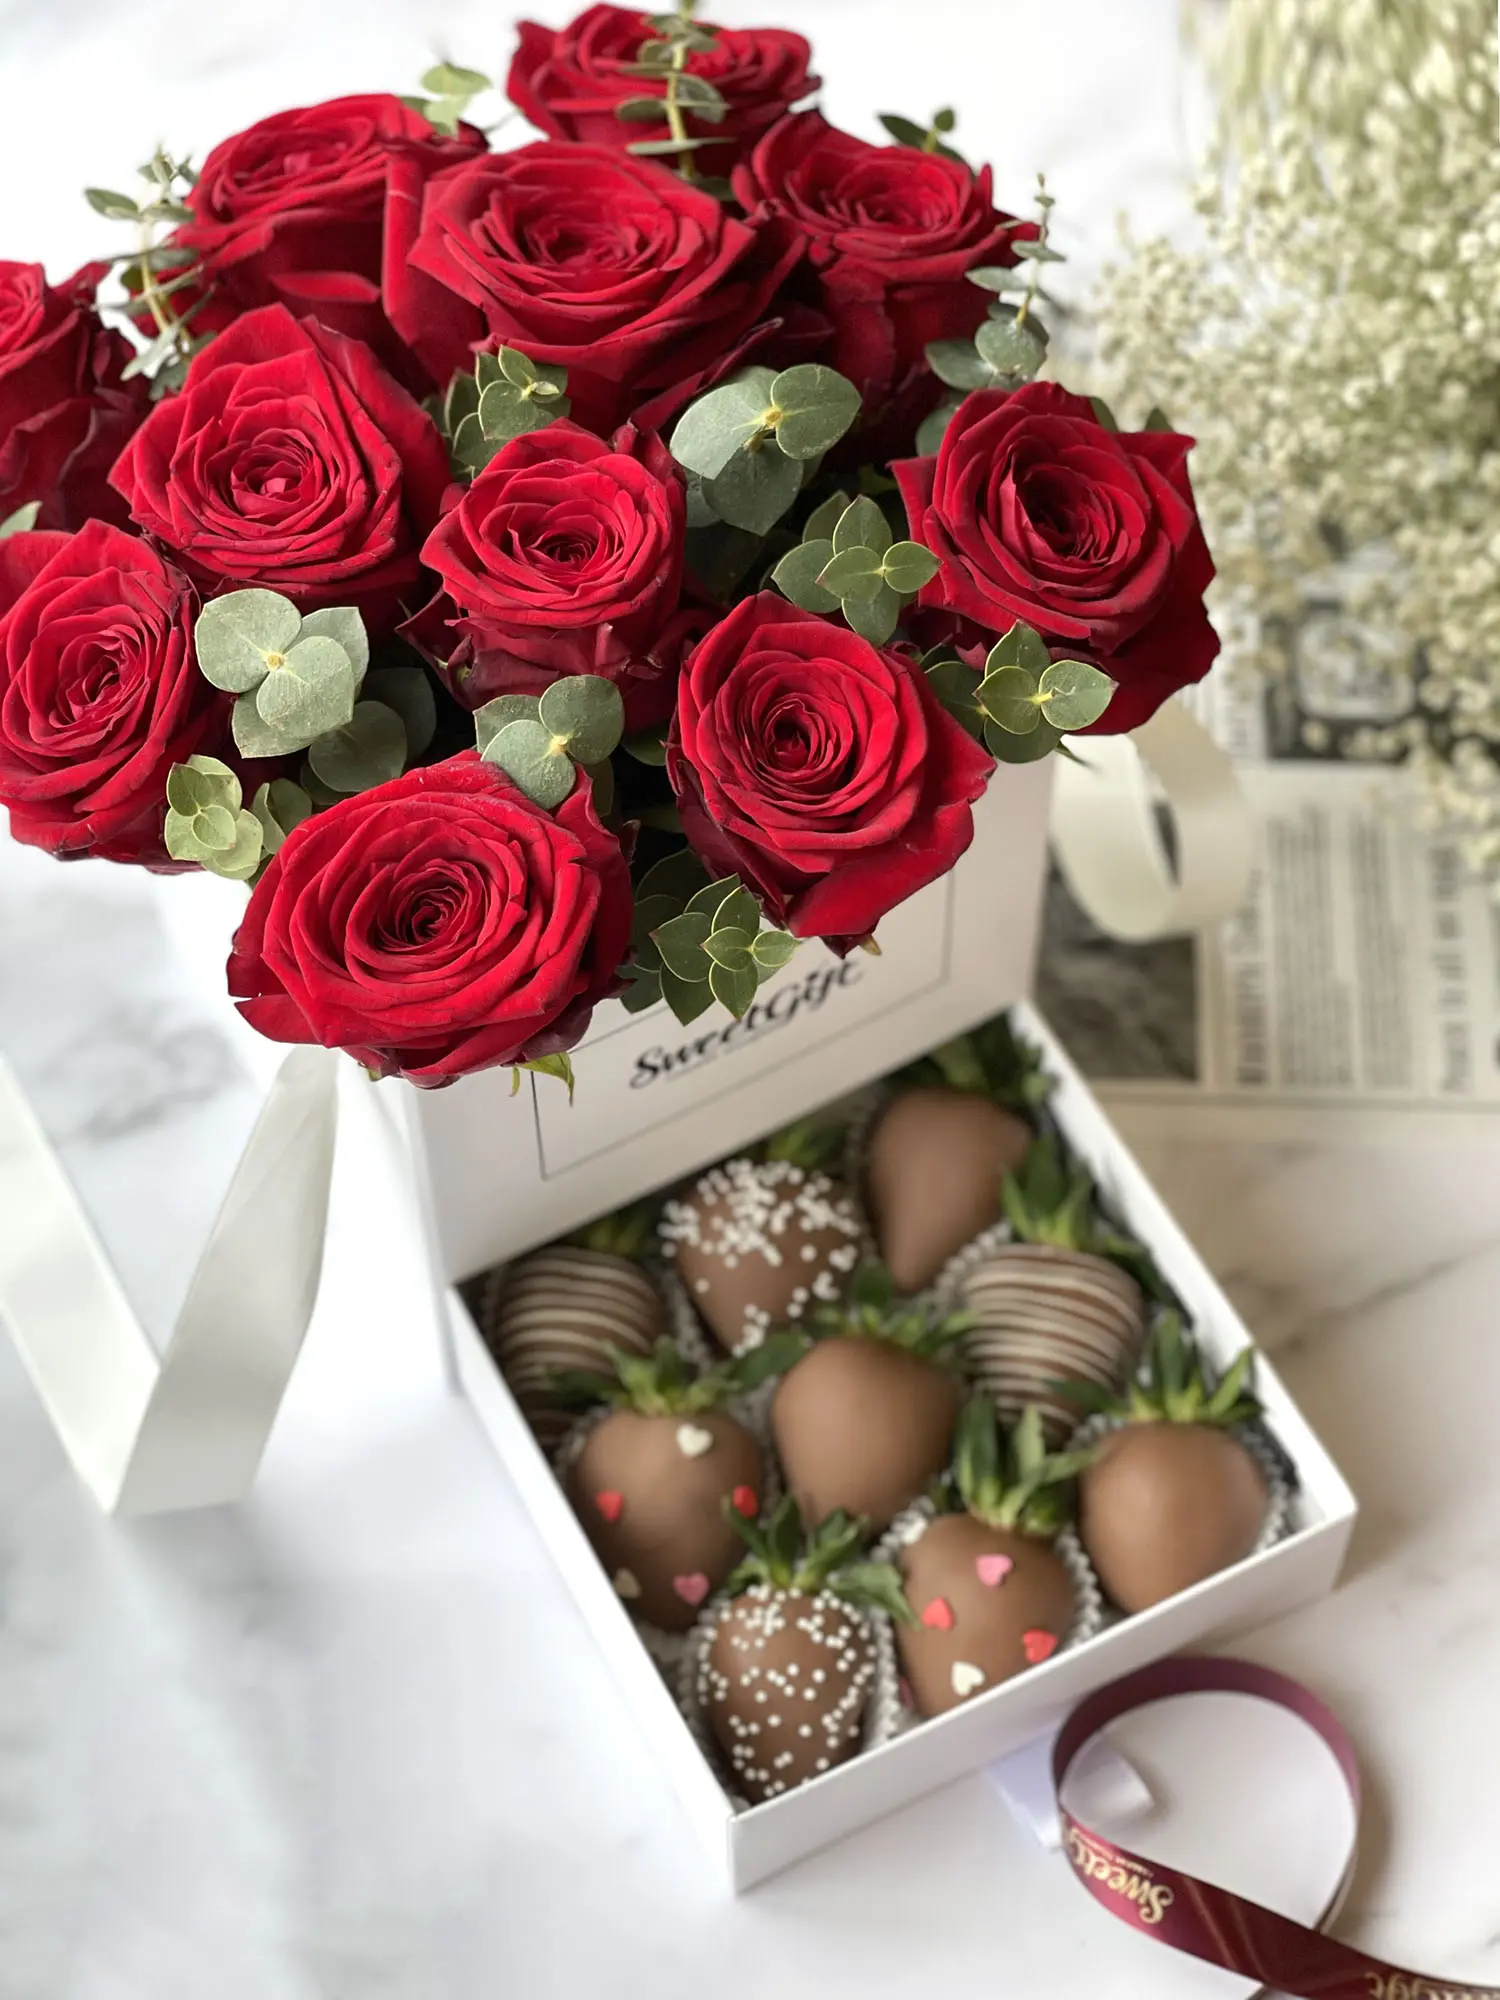 Букет шкатулка из роз и клубники "Кармен" 4 300.00 руб.